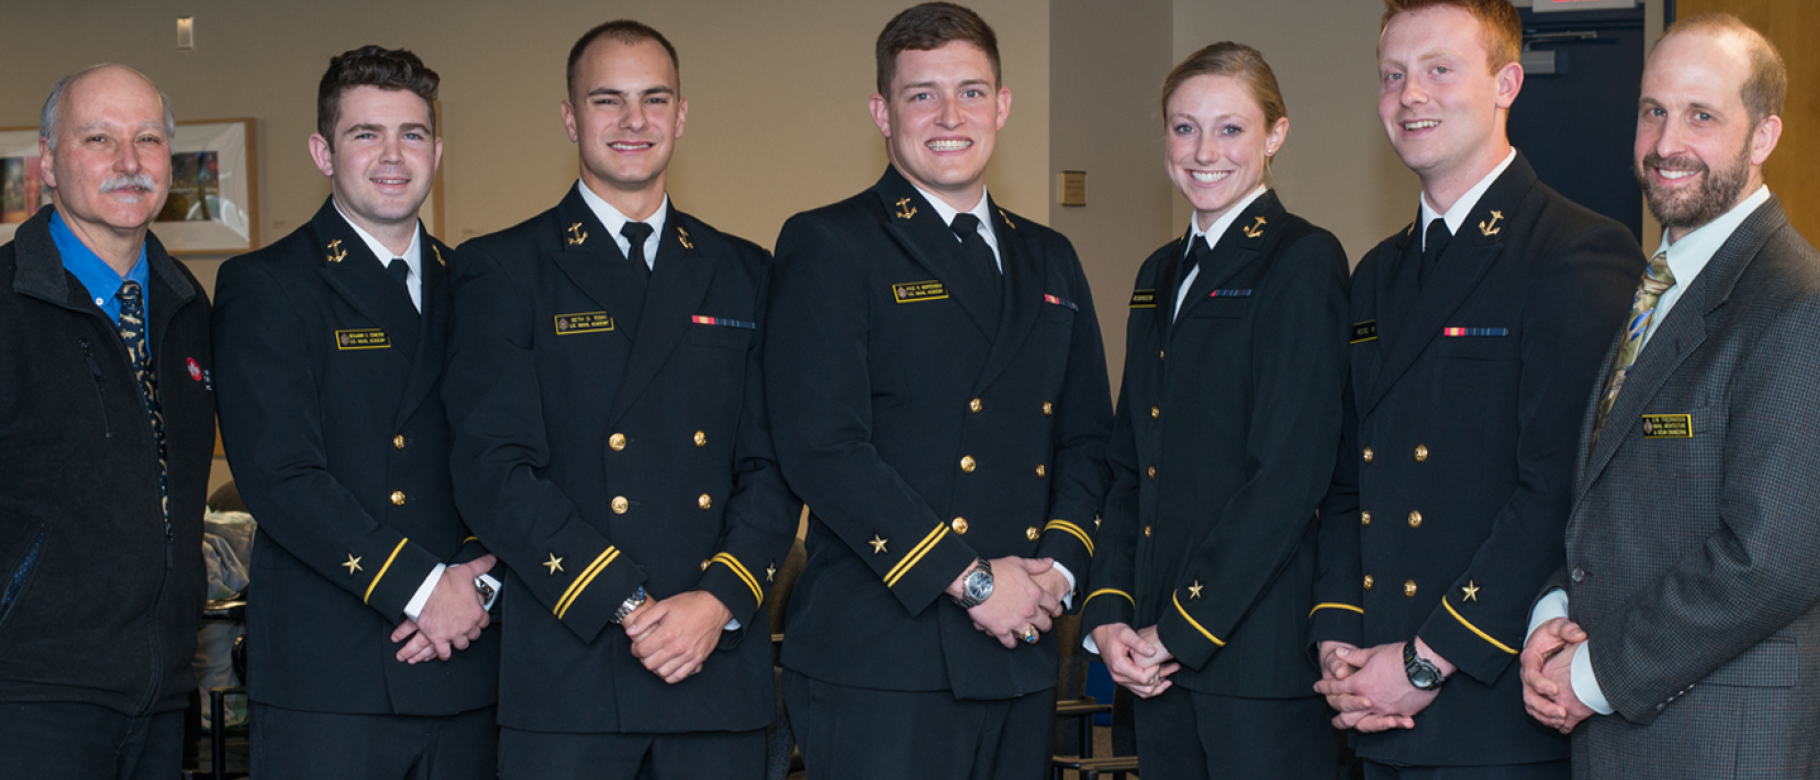 UNE celebrates new partnership with U.S. Naval Academy